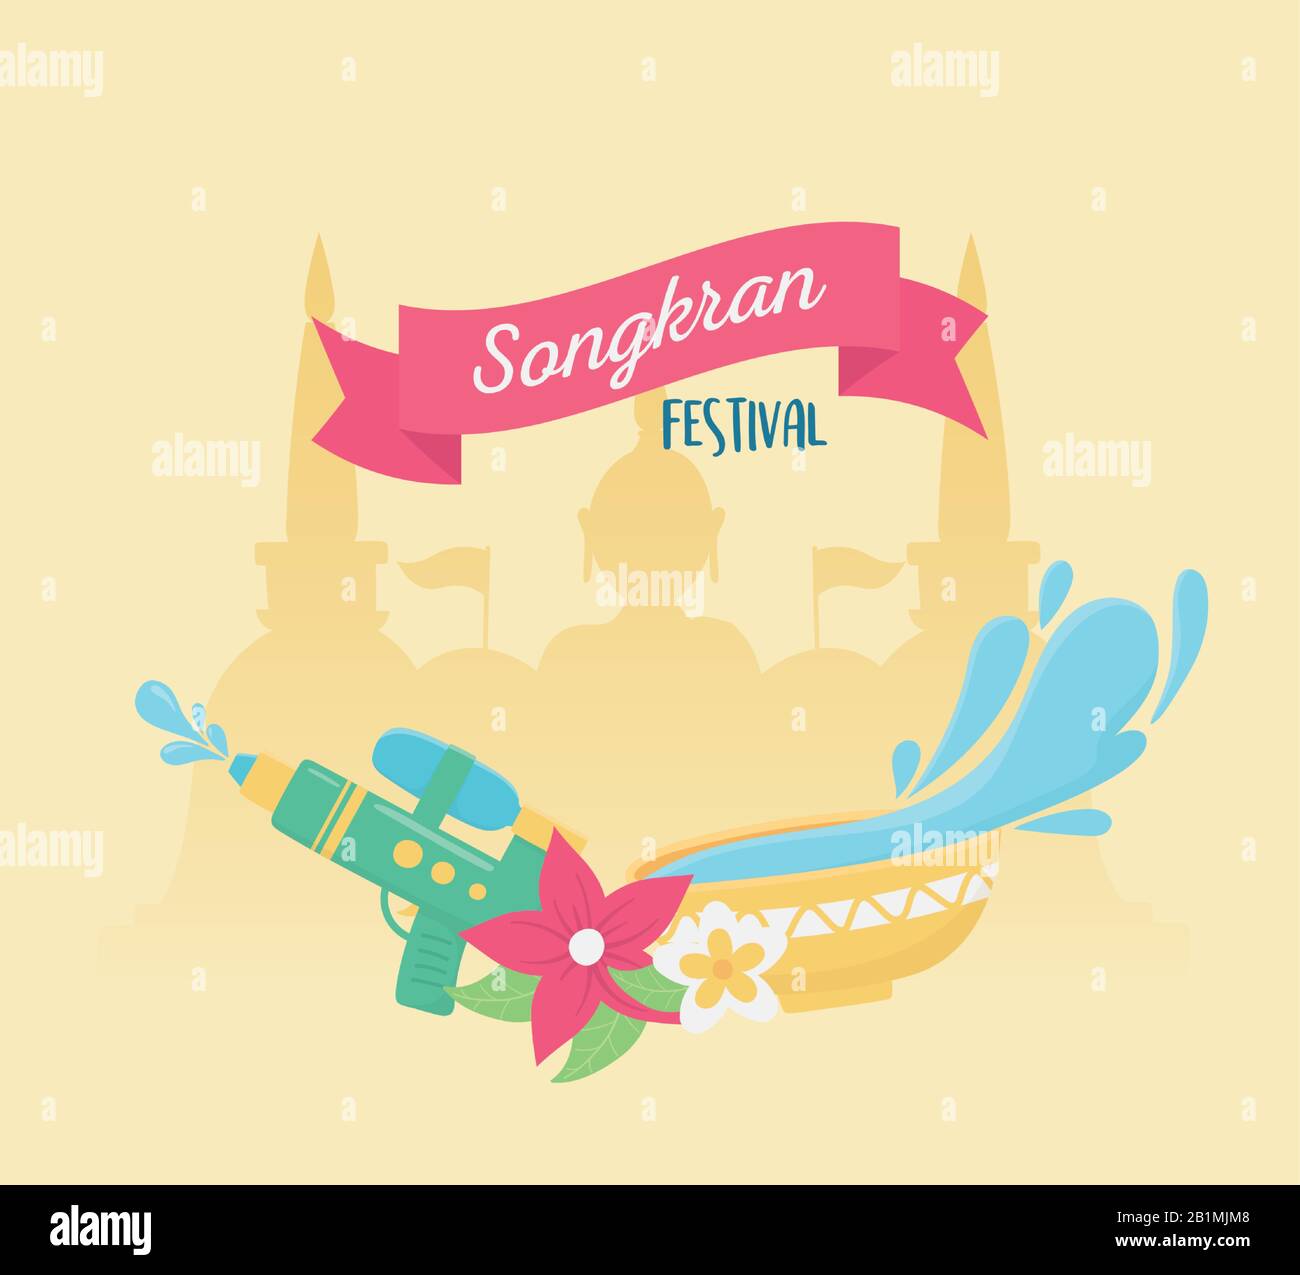 songkran festival buddha temple pagoda culture banner vector illustration Stock Vector